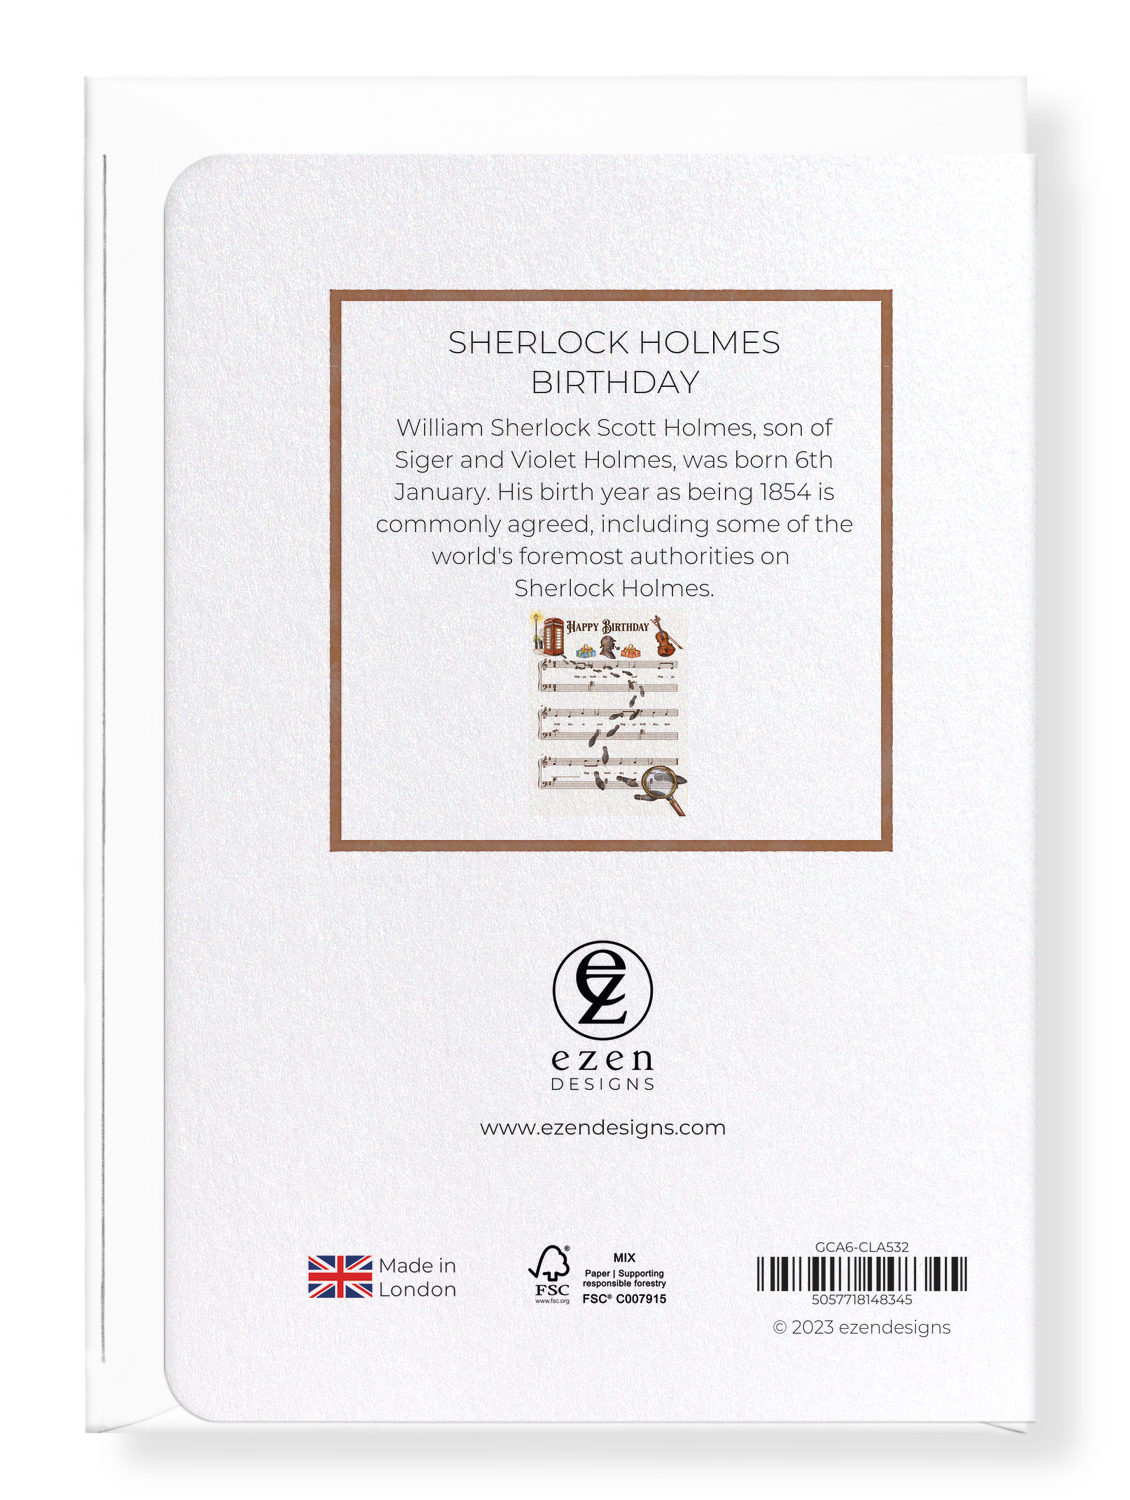 Ezen Designs - Sherlock Holmes Birthday - Greeting Card - Back